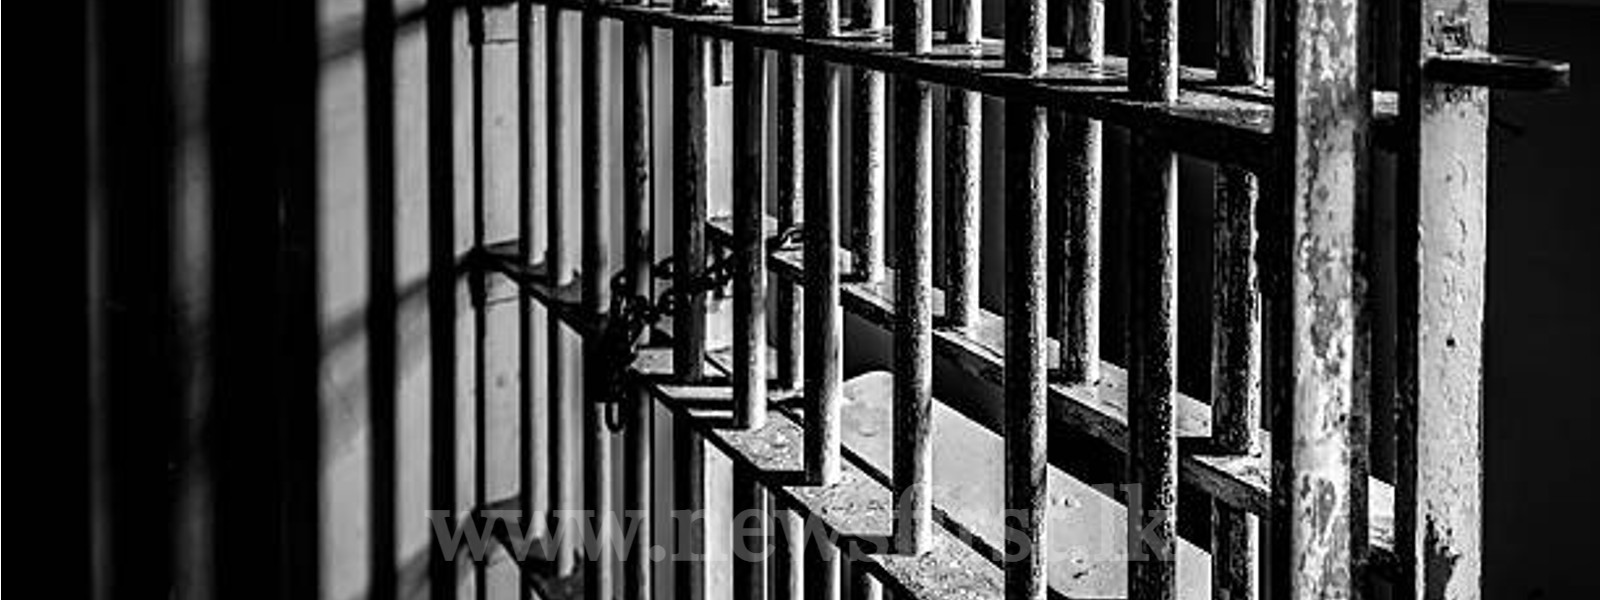 244 prisoners to be pardoned for Vesak